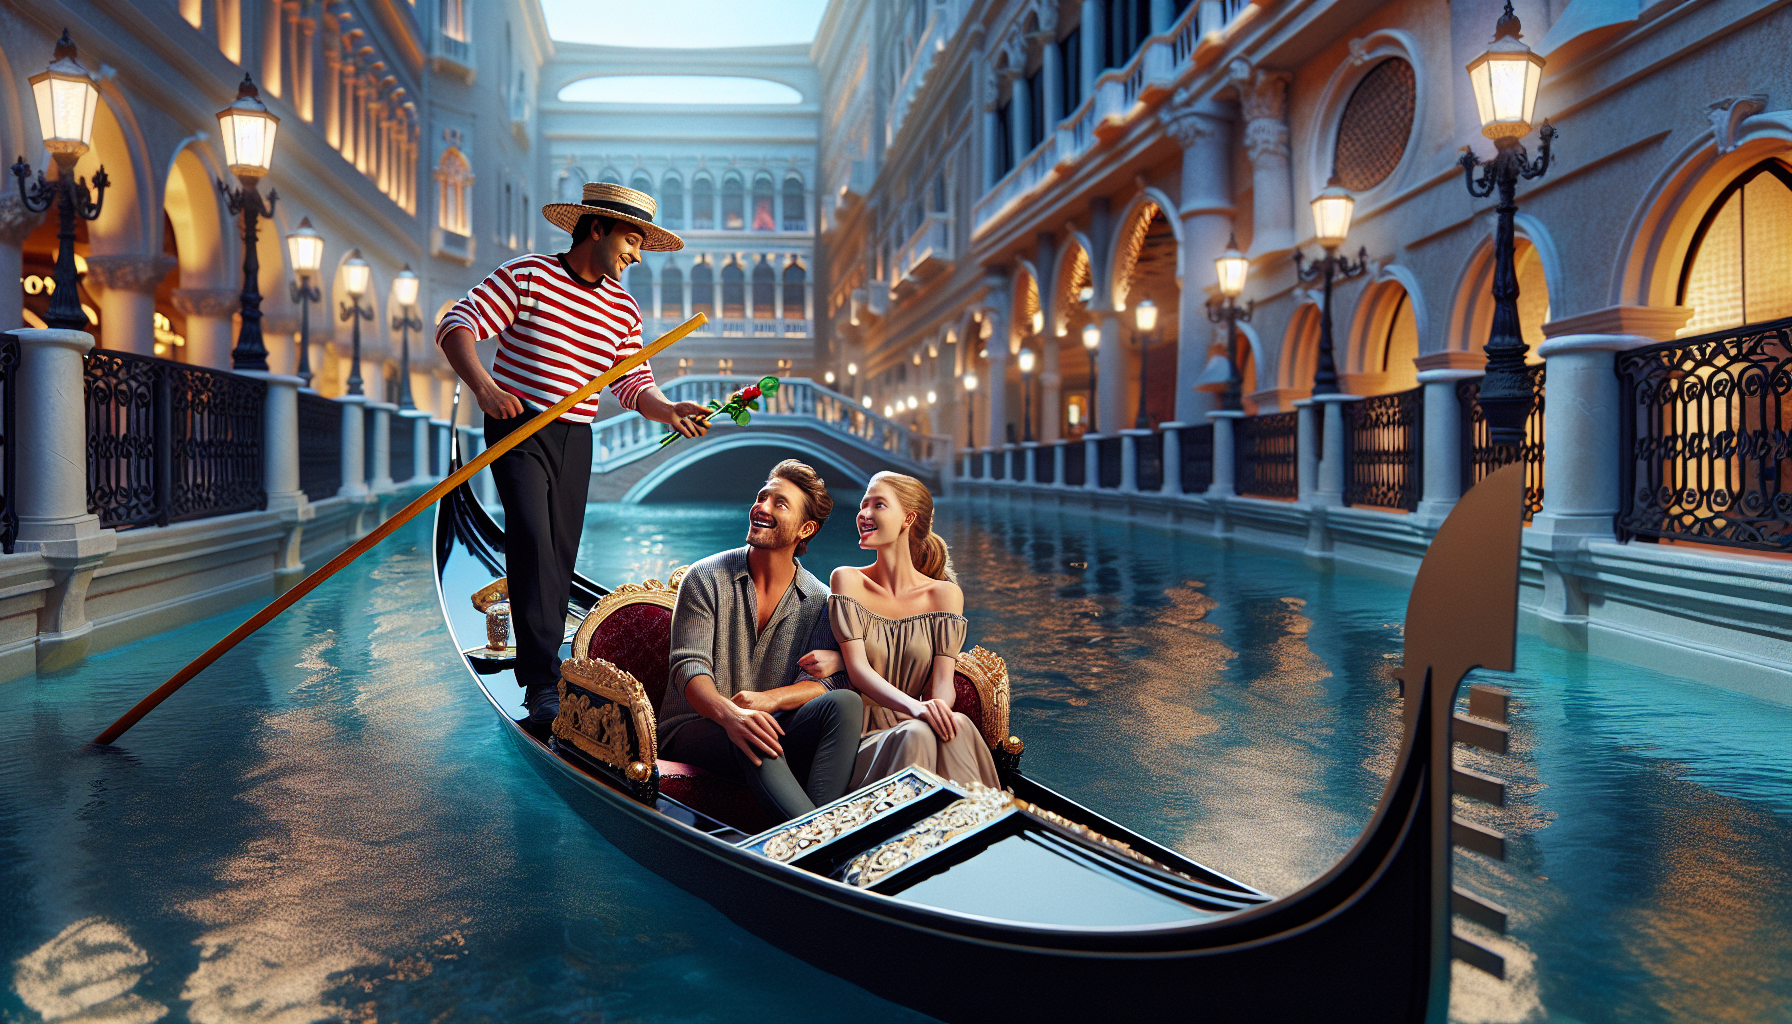 Romantic gondola ride at the Venetian in Las Vegas